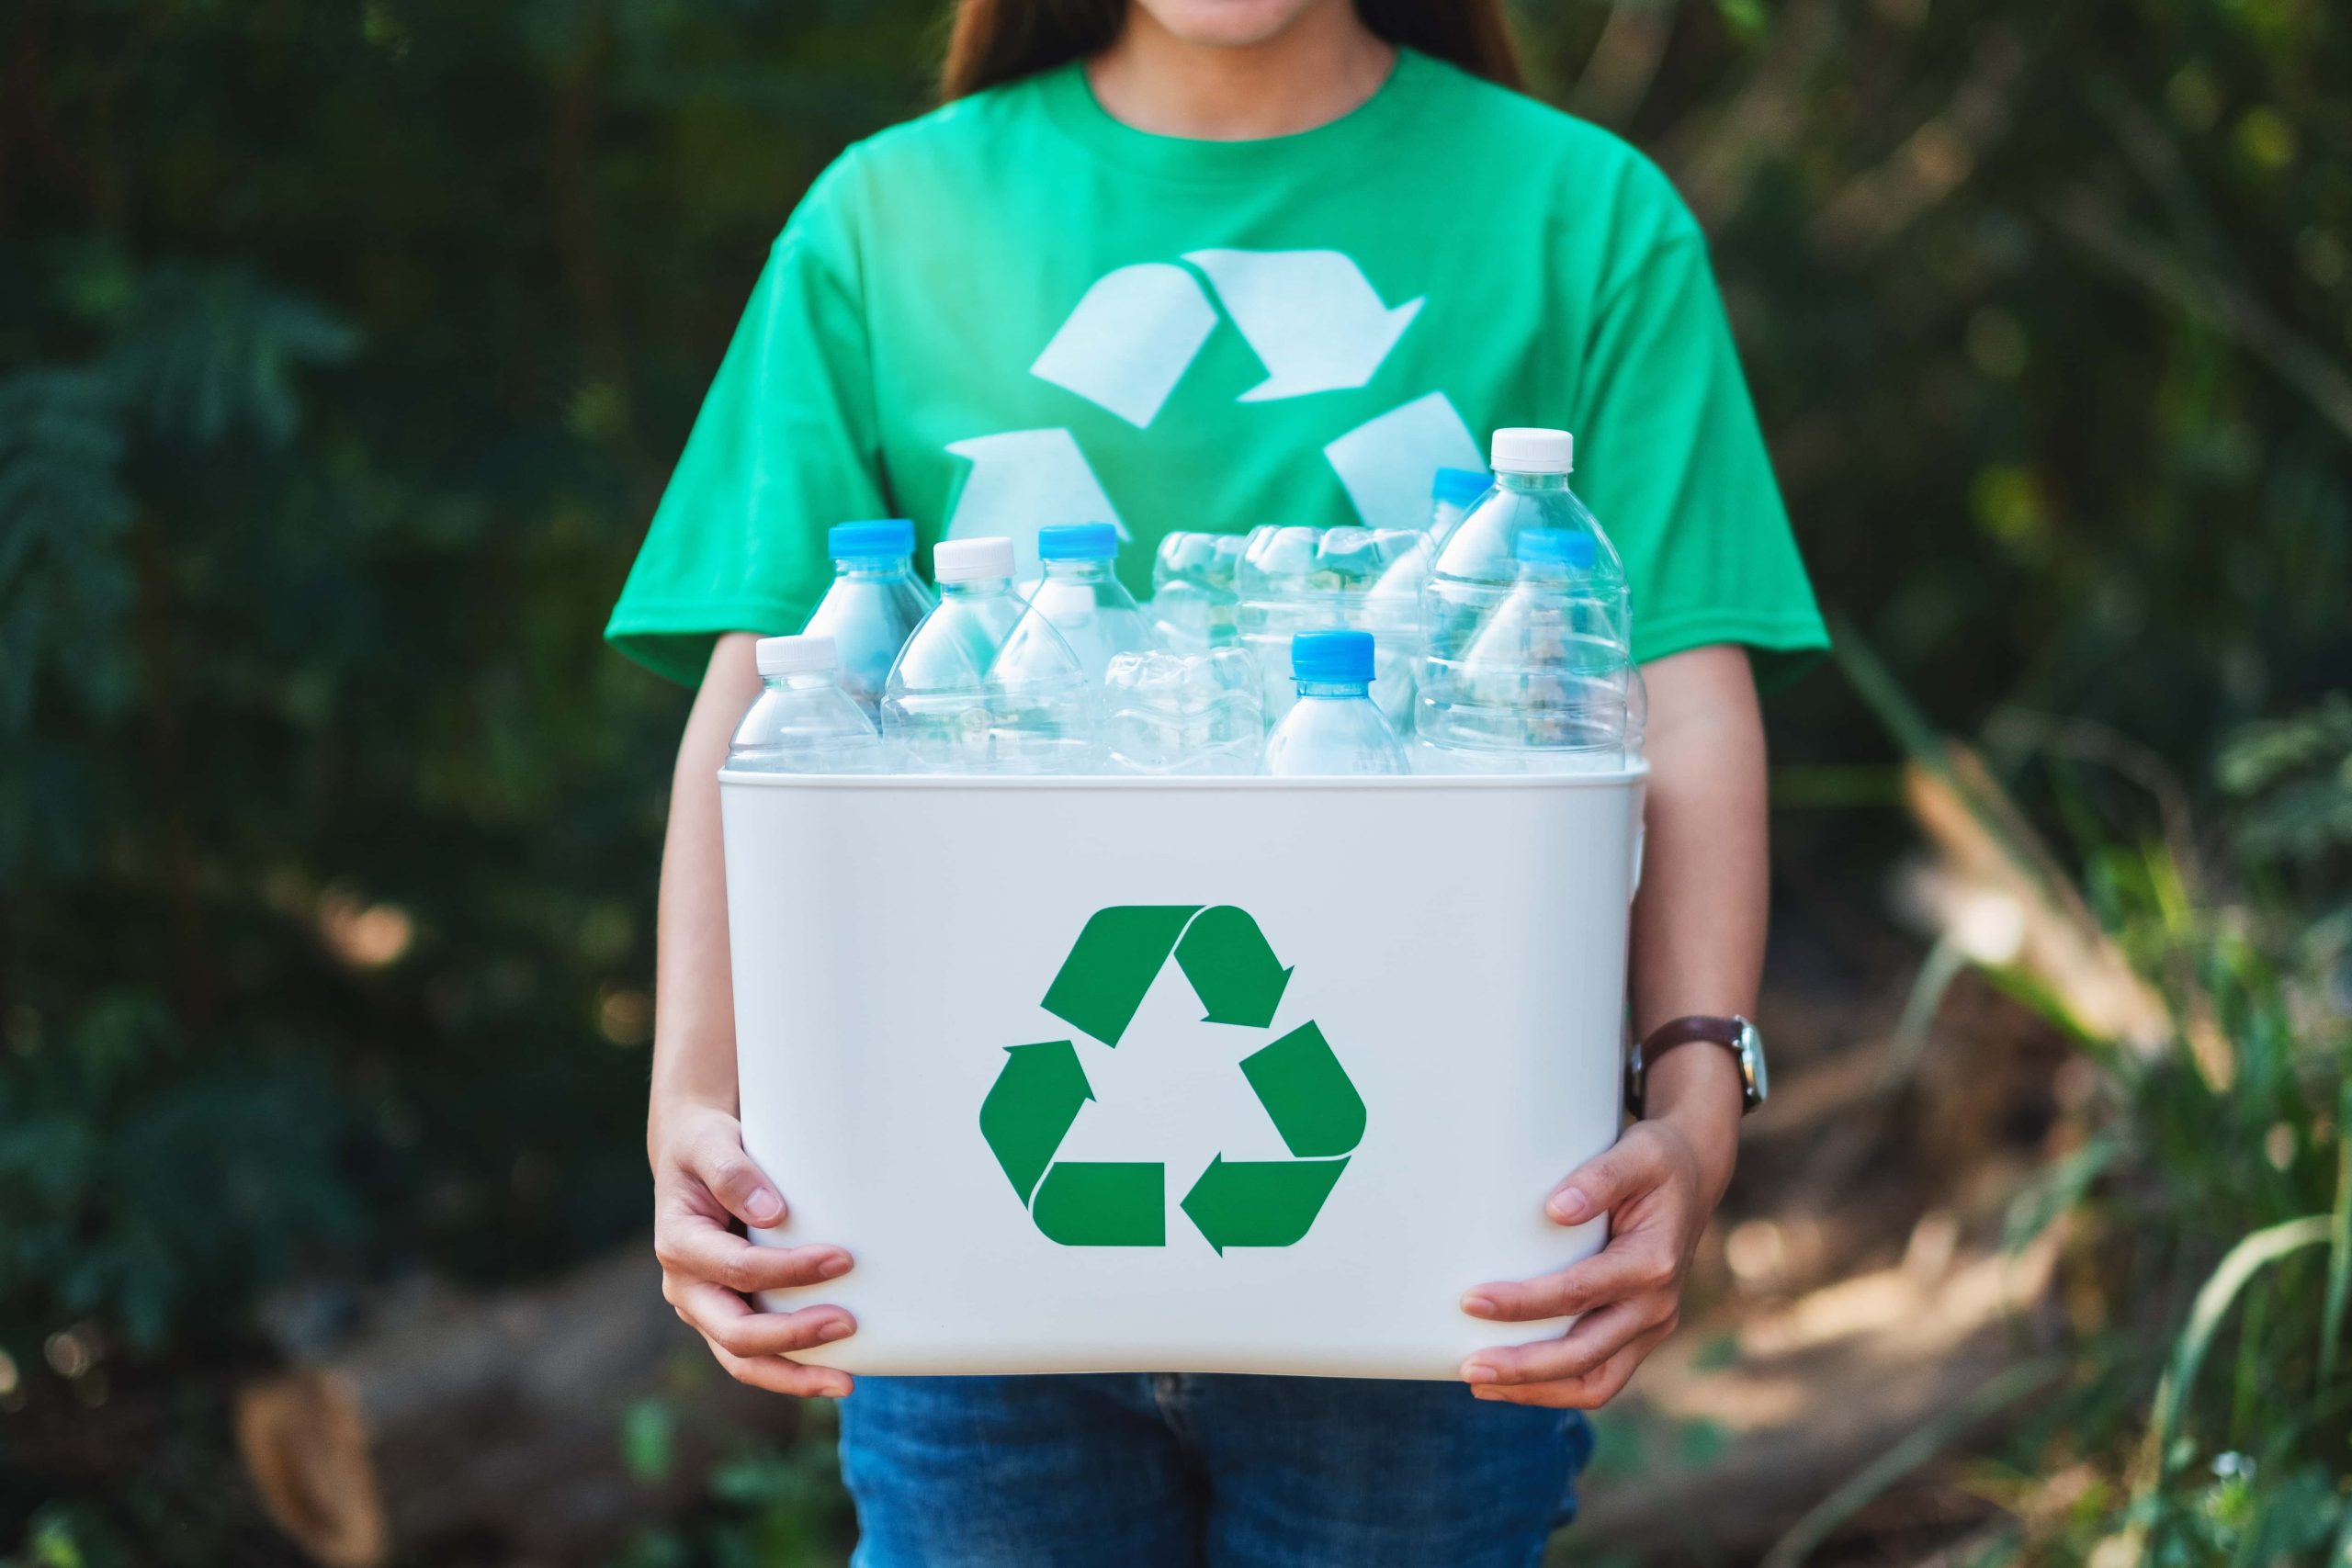 Plastic Recycling Process